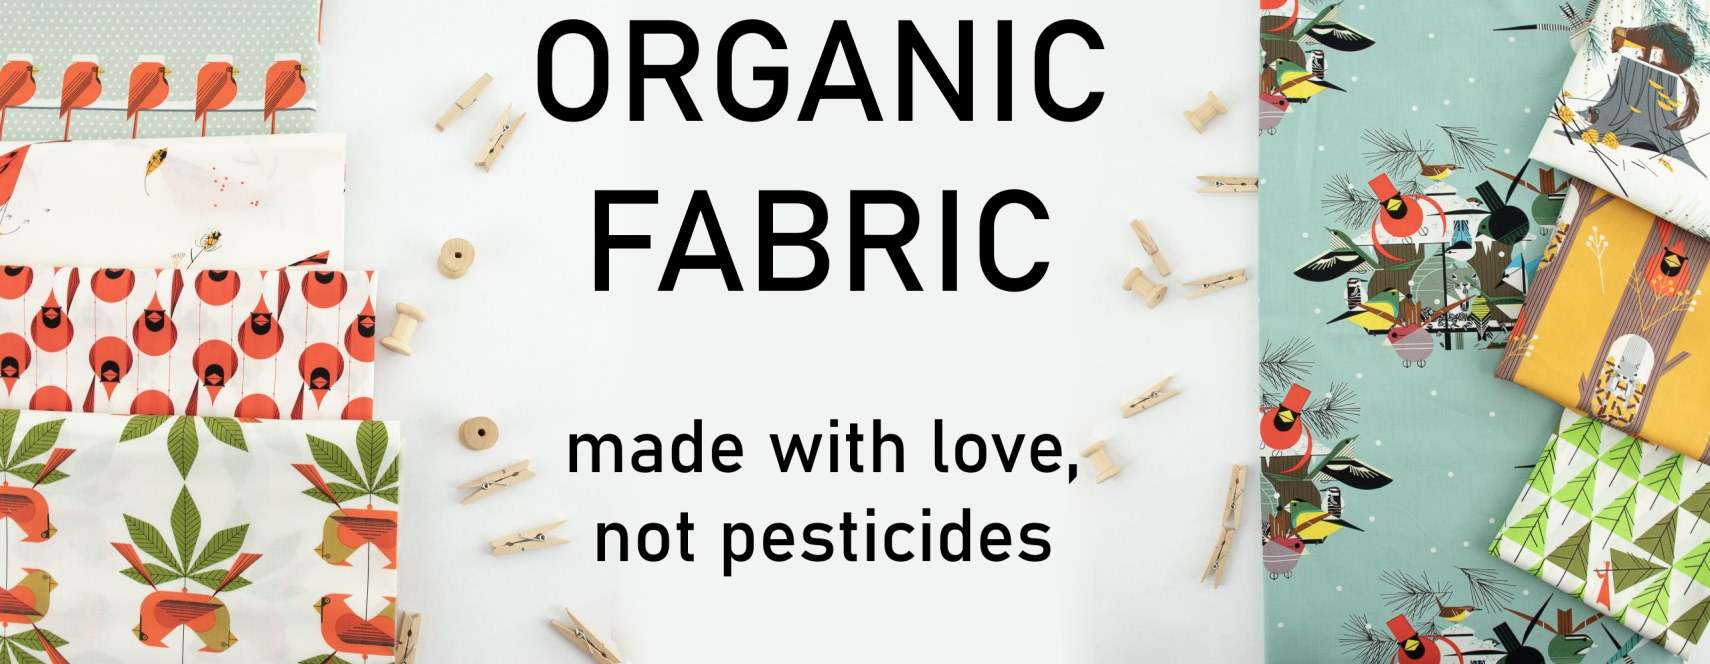 ORGANIC FABRICS: made with love, not pesticides